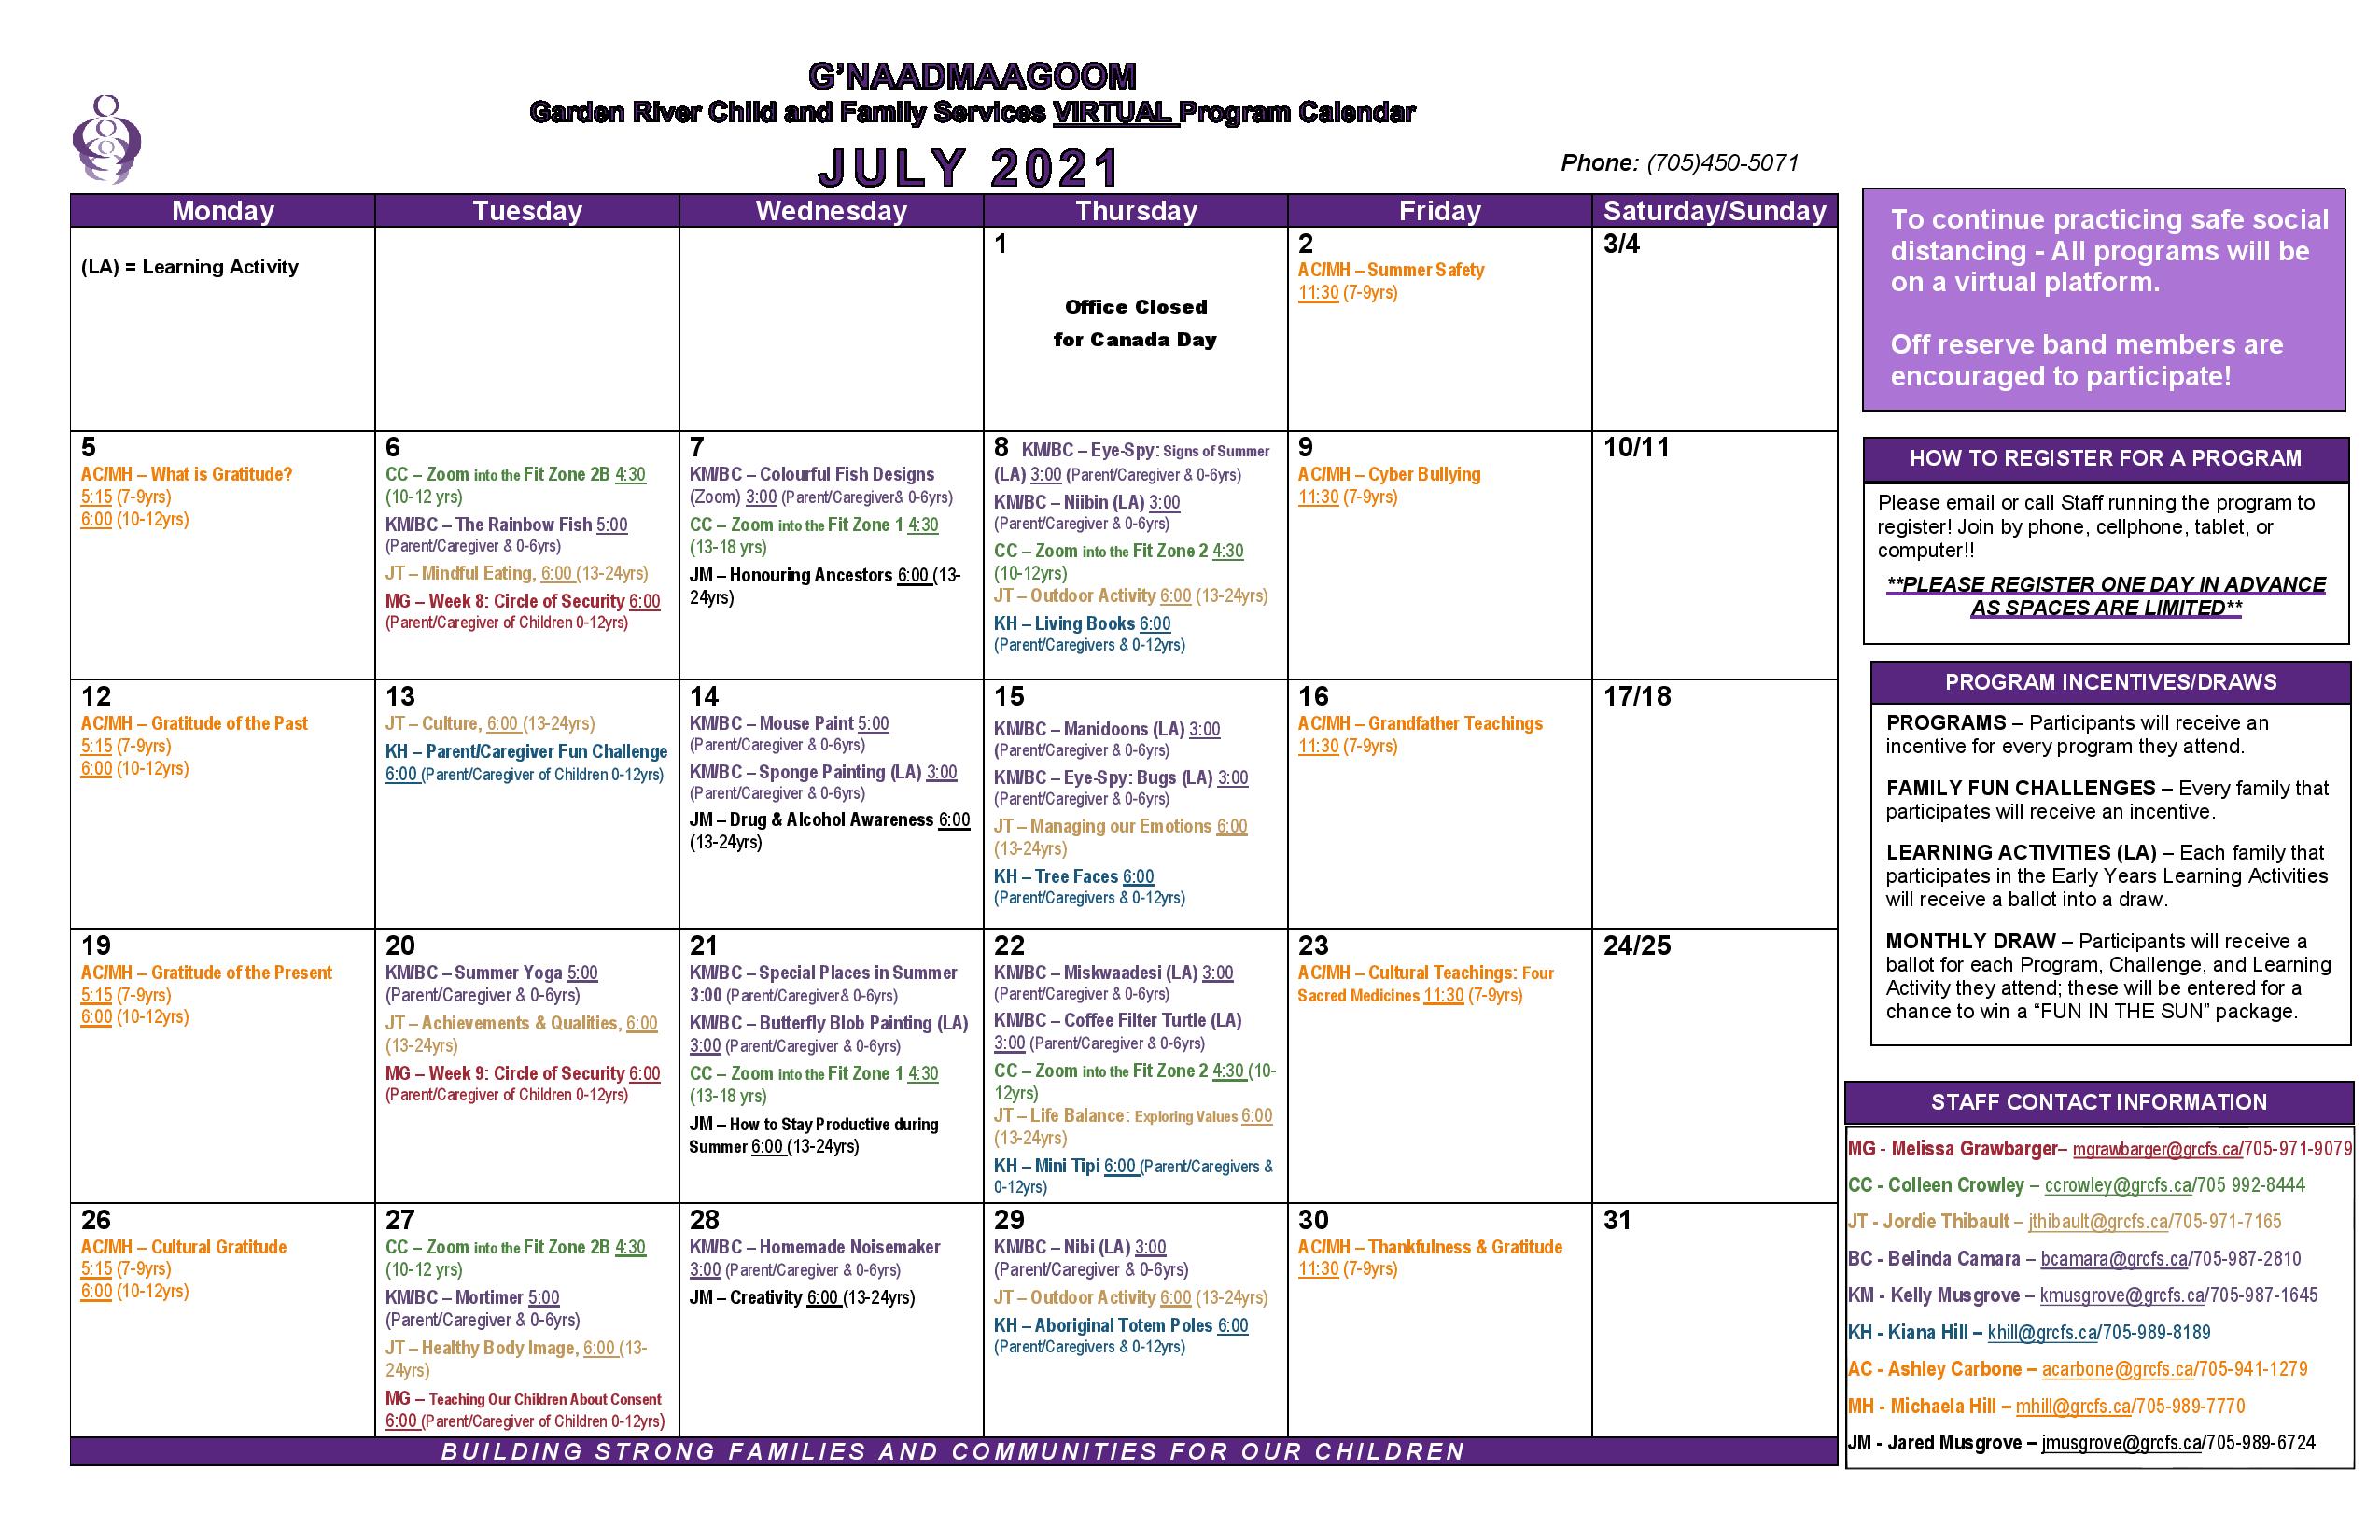 GRCFS Program Calendar: JULY 2021